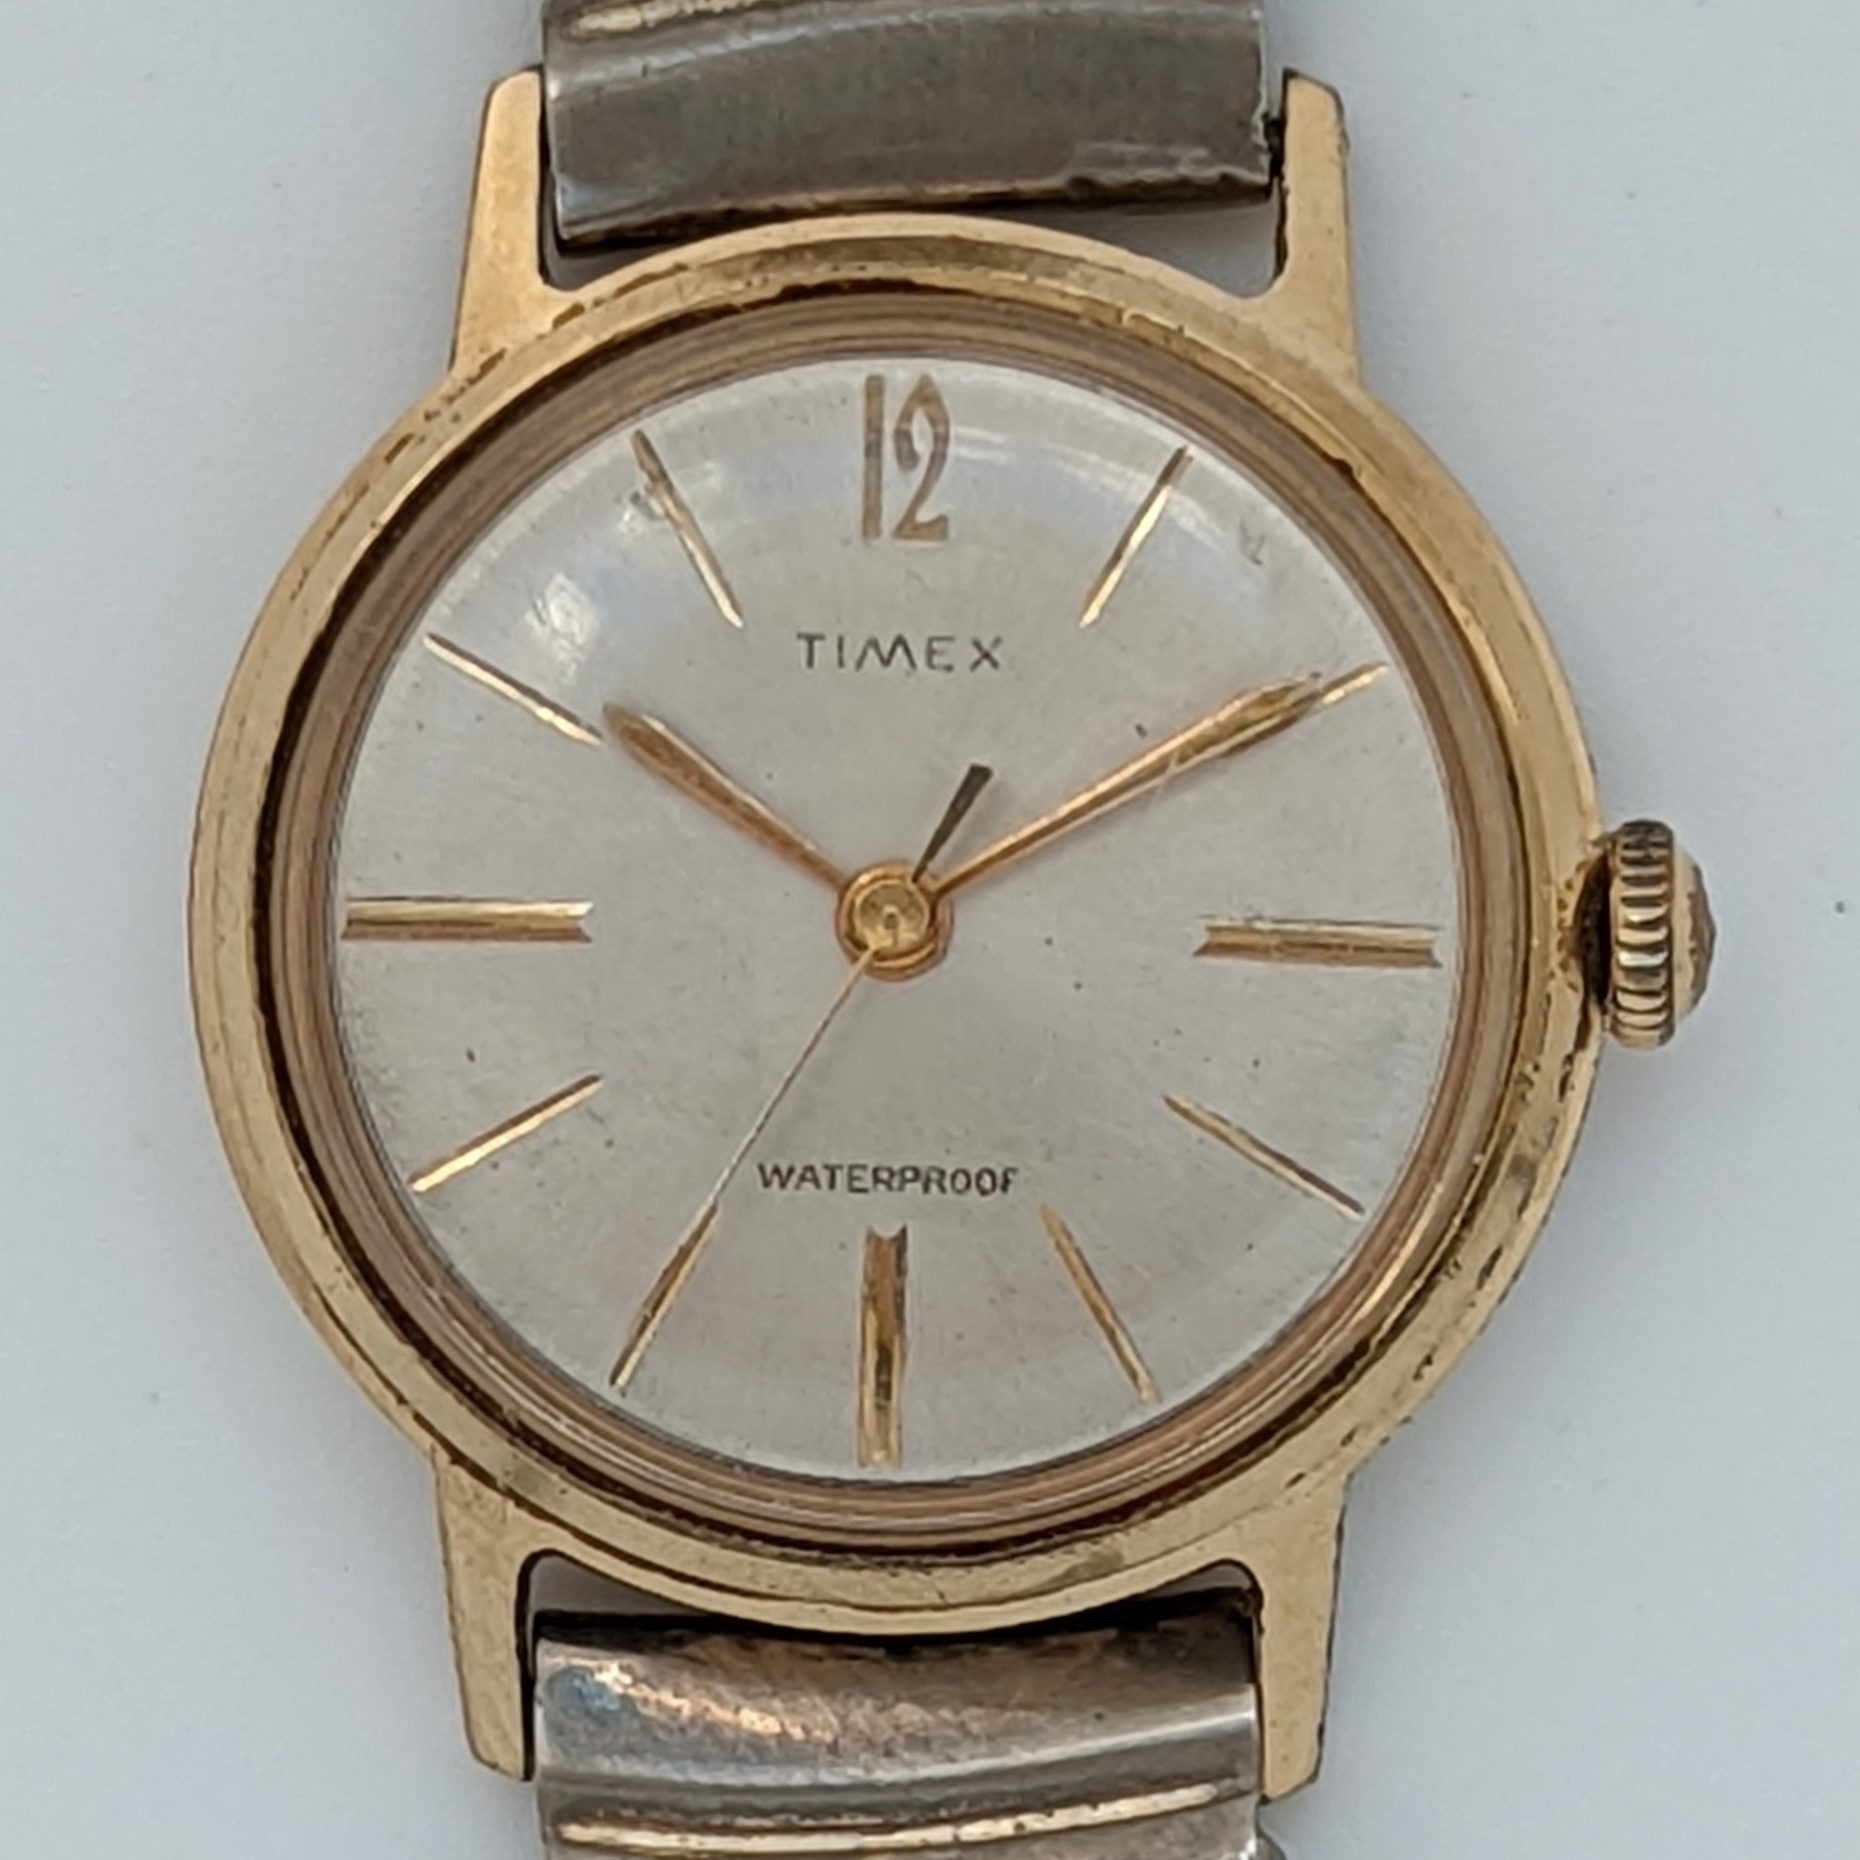 Timex Sprite 1164 2466 [1966]